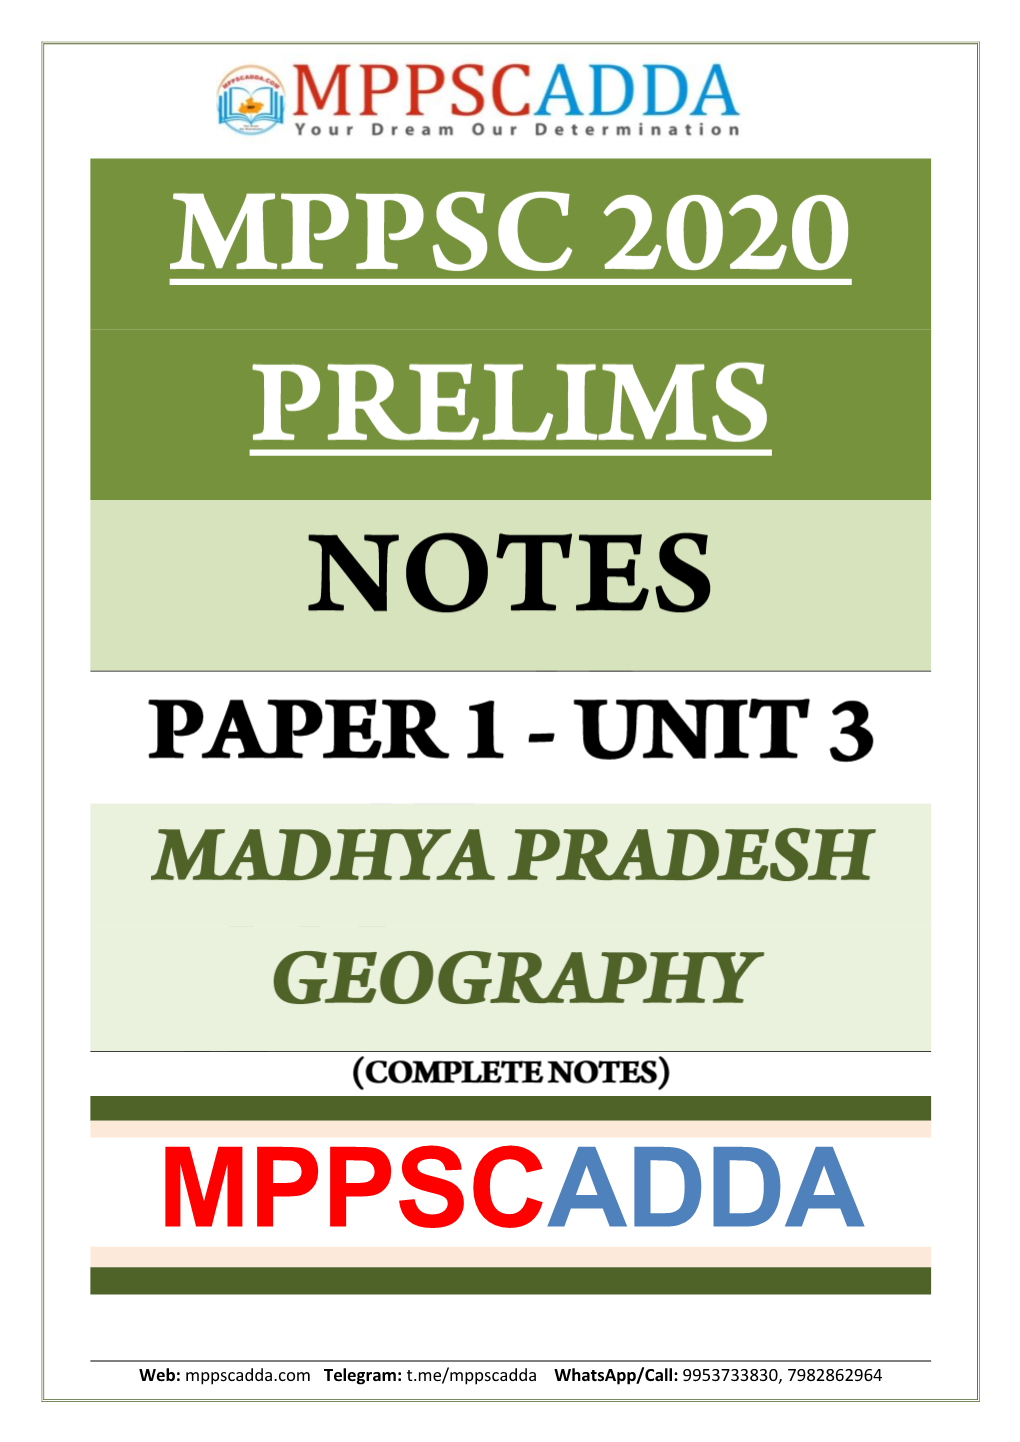 Madhya Pradesh: Geography Contents